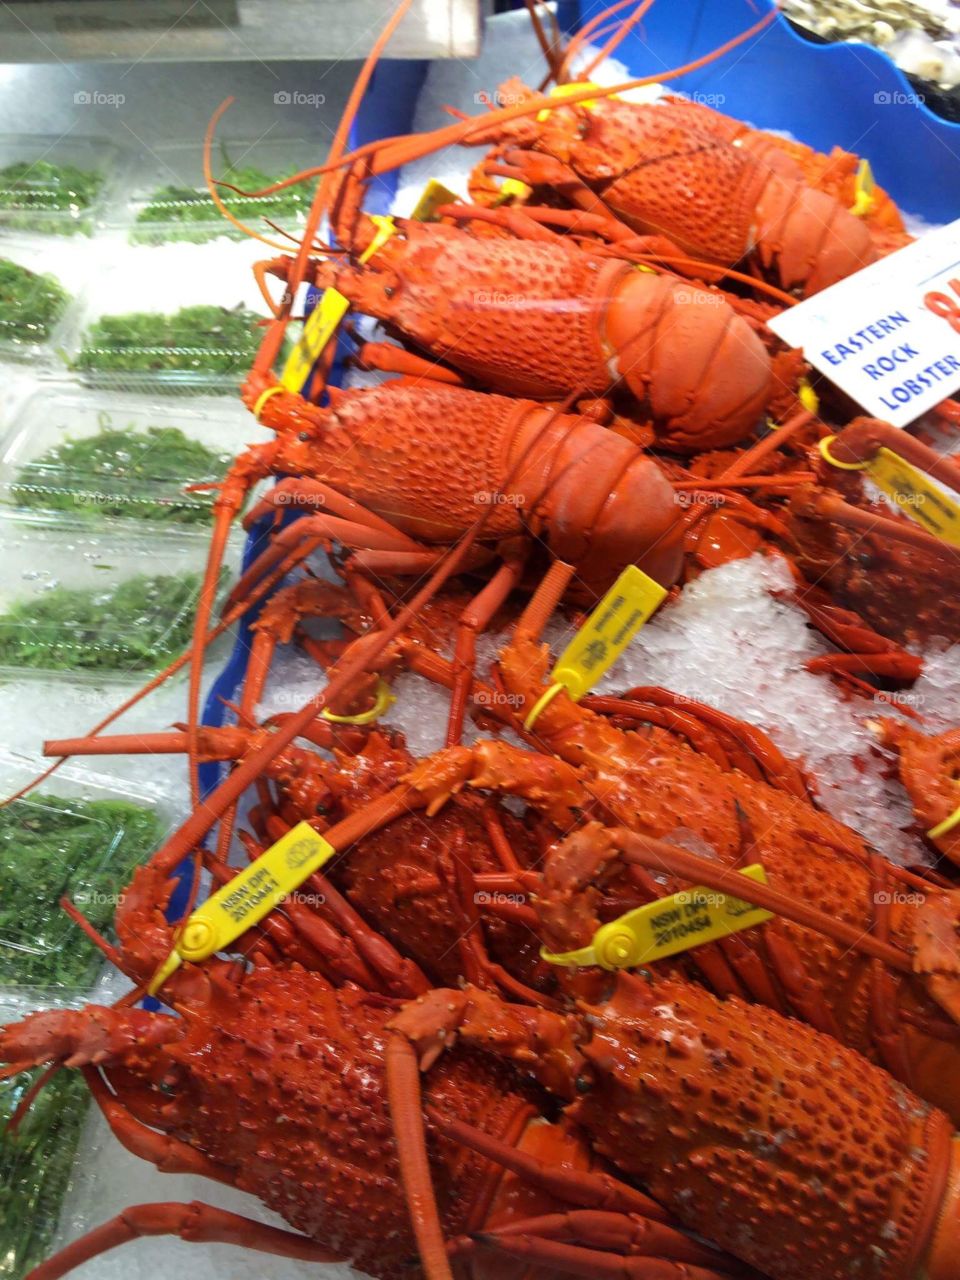 Eastern Rock Lobster at Fish Market Sydney,Australia